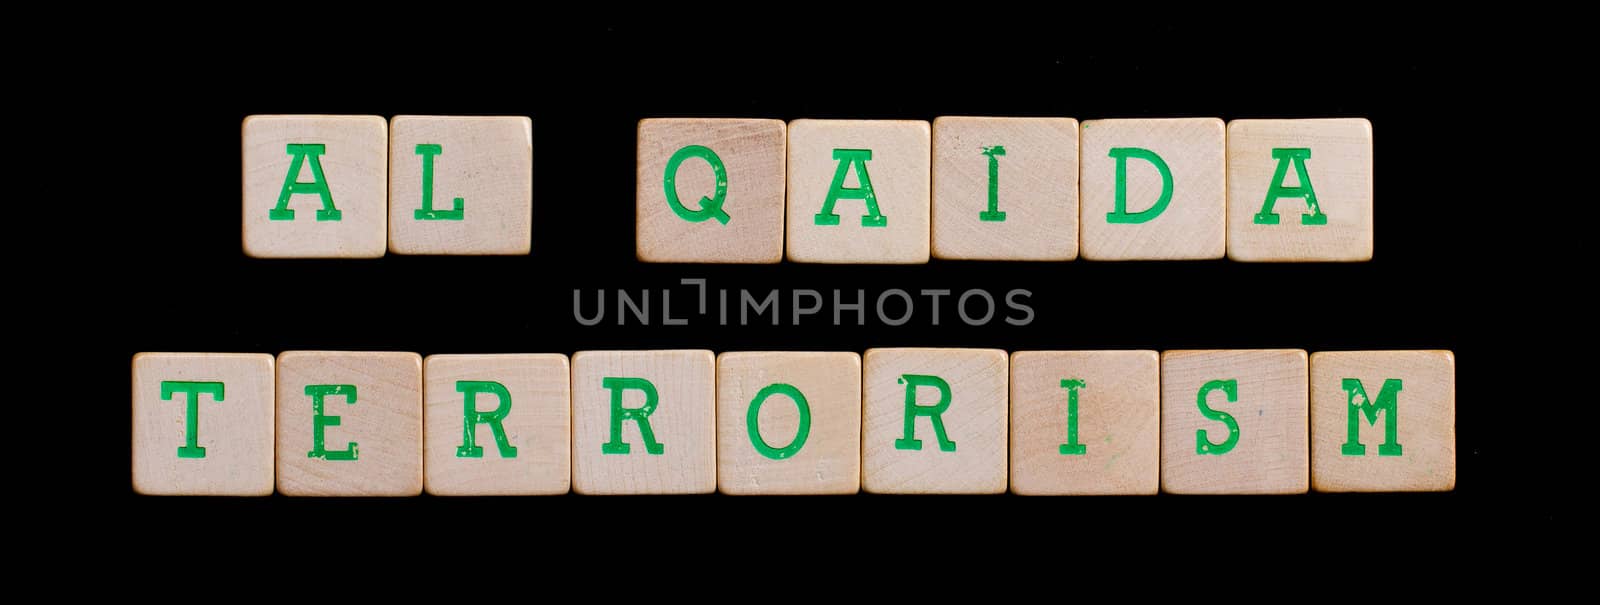 Letters on wooden blocks (alqaida terrorism) by michaklootwijk